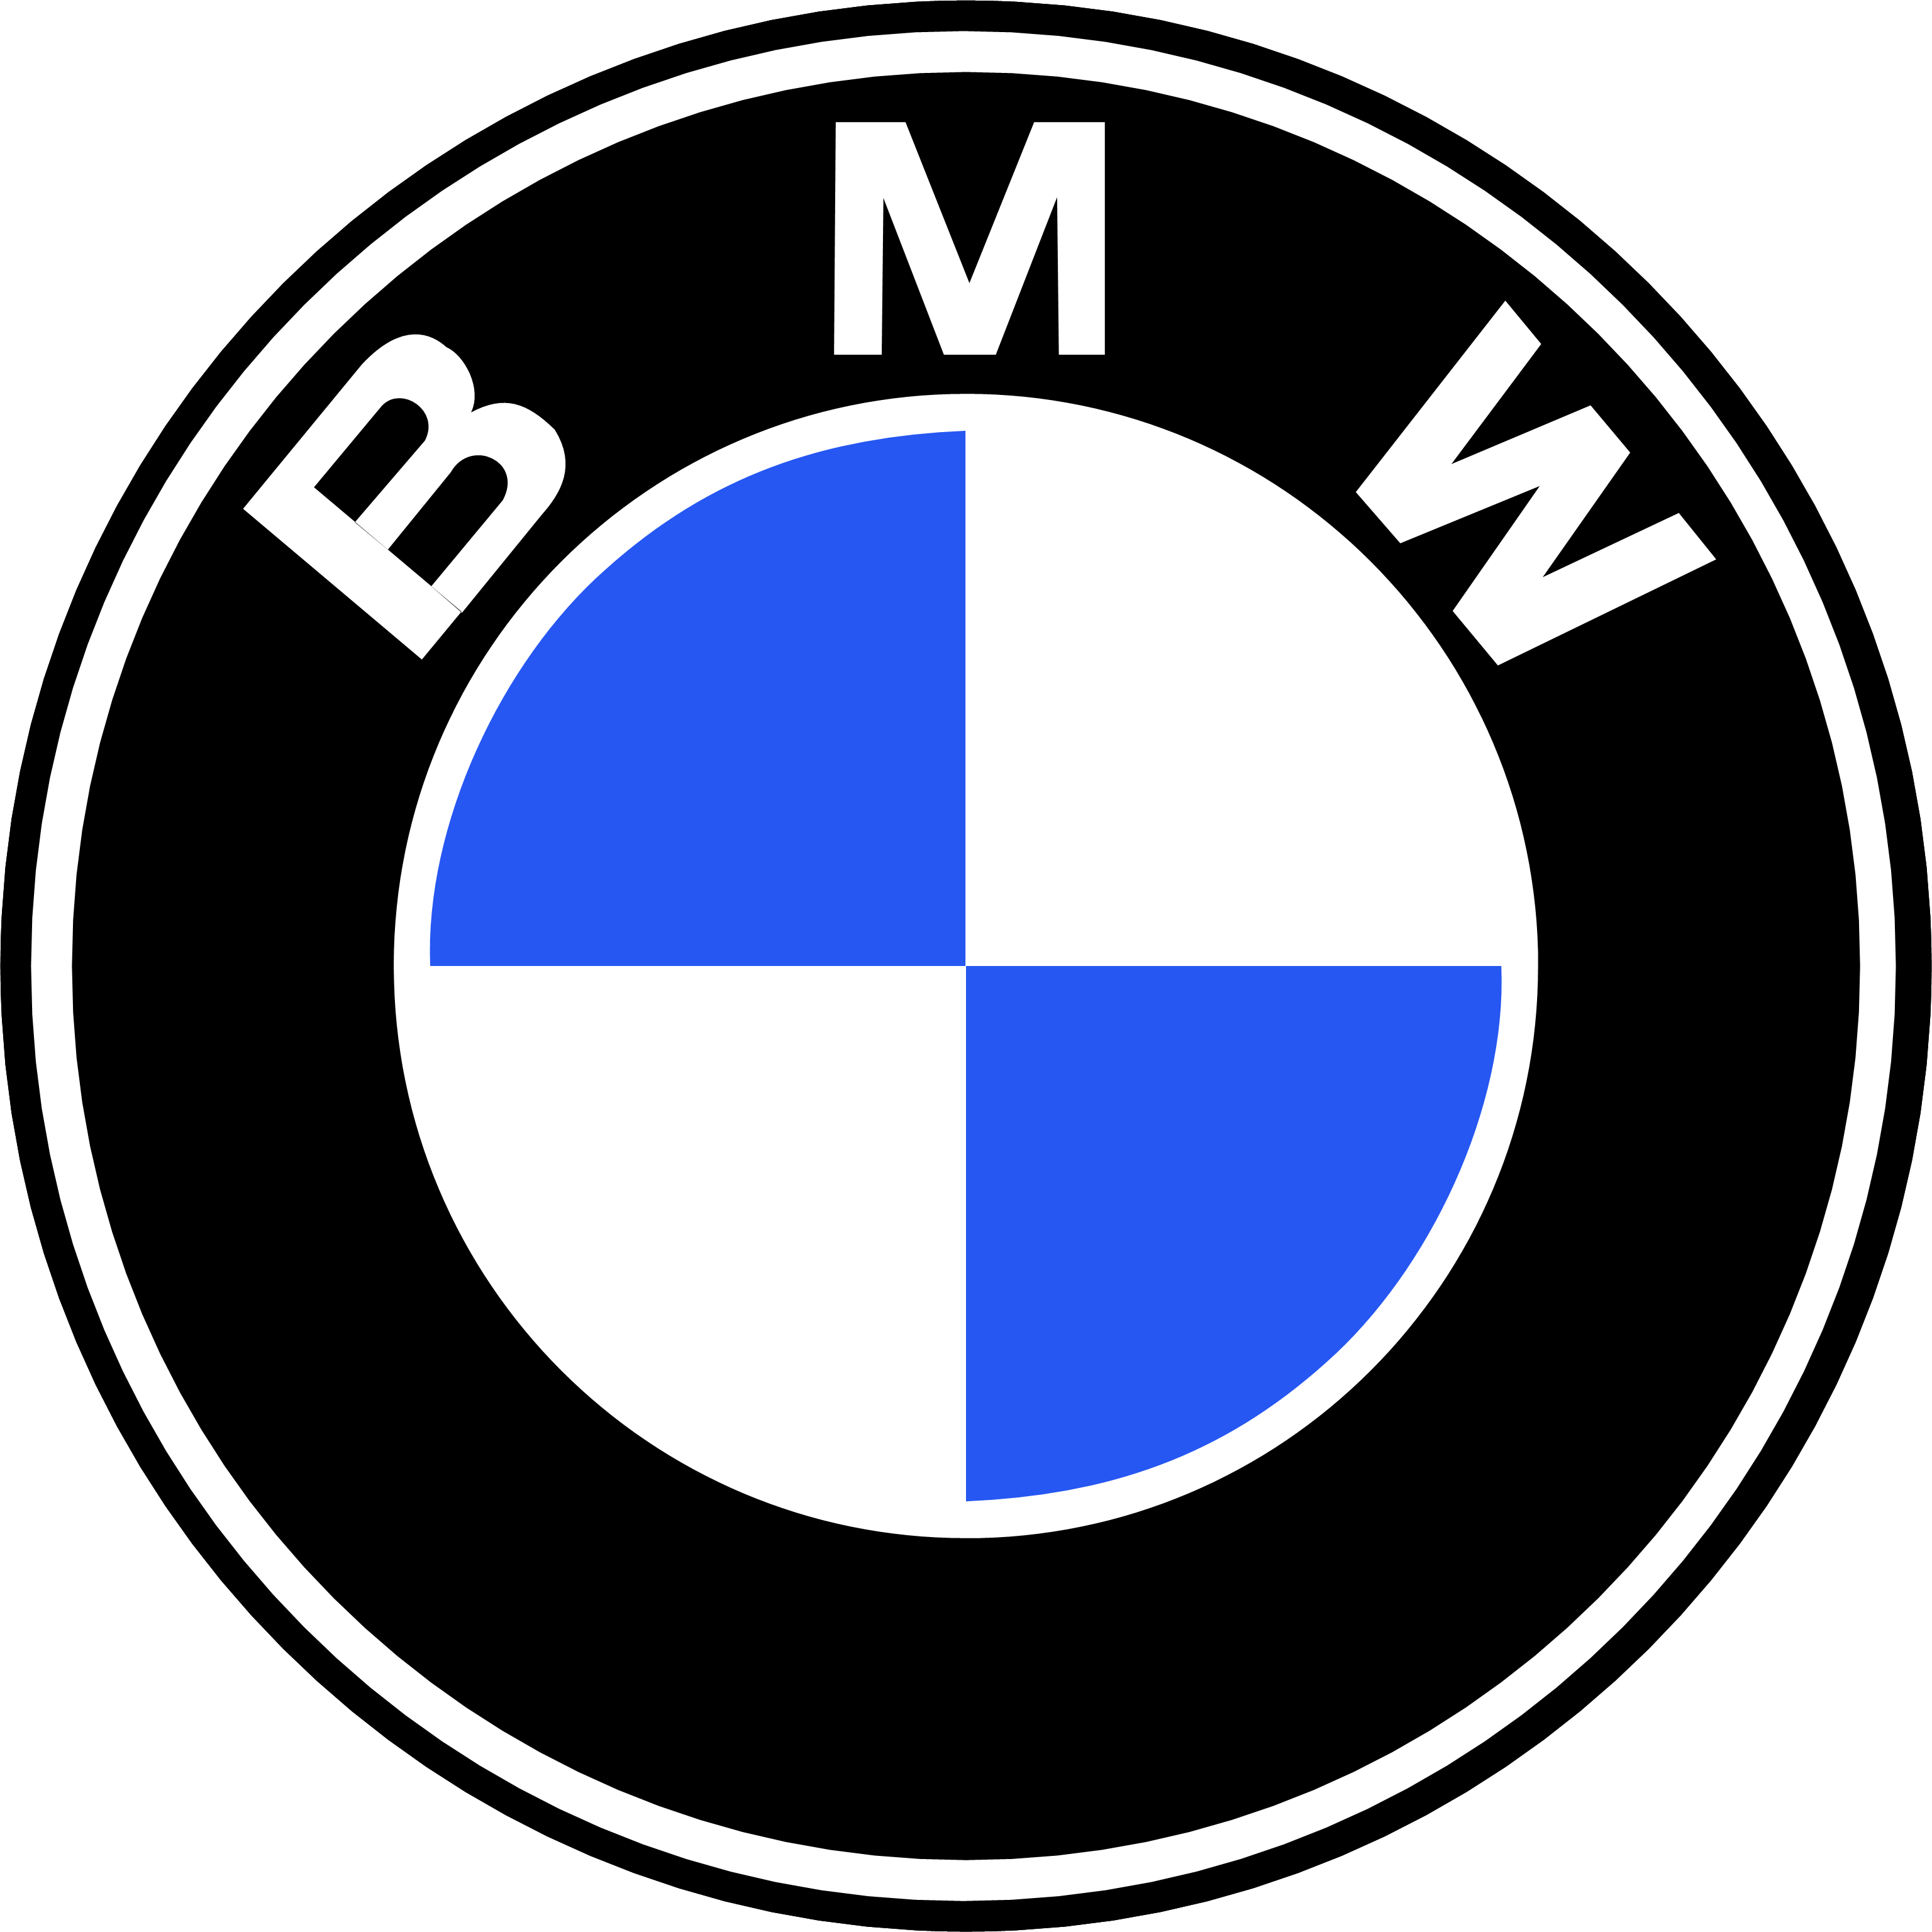 Download Logo Series E9 Bmw Car Download Free Image HQ PNG Image